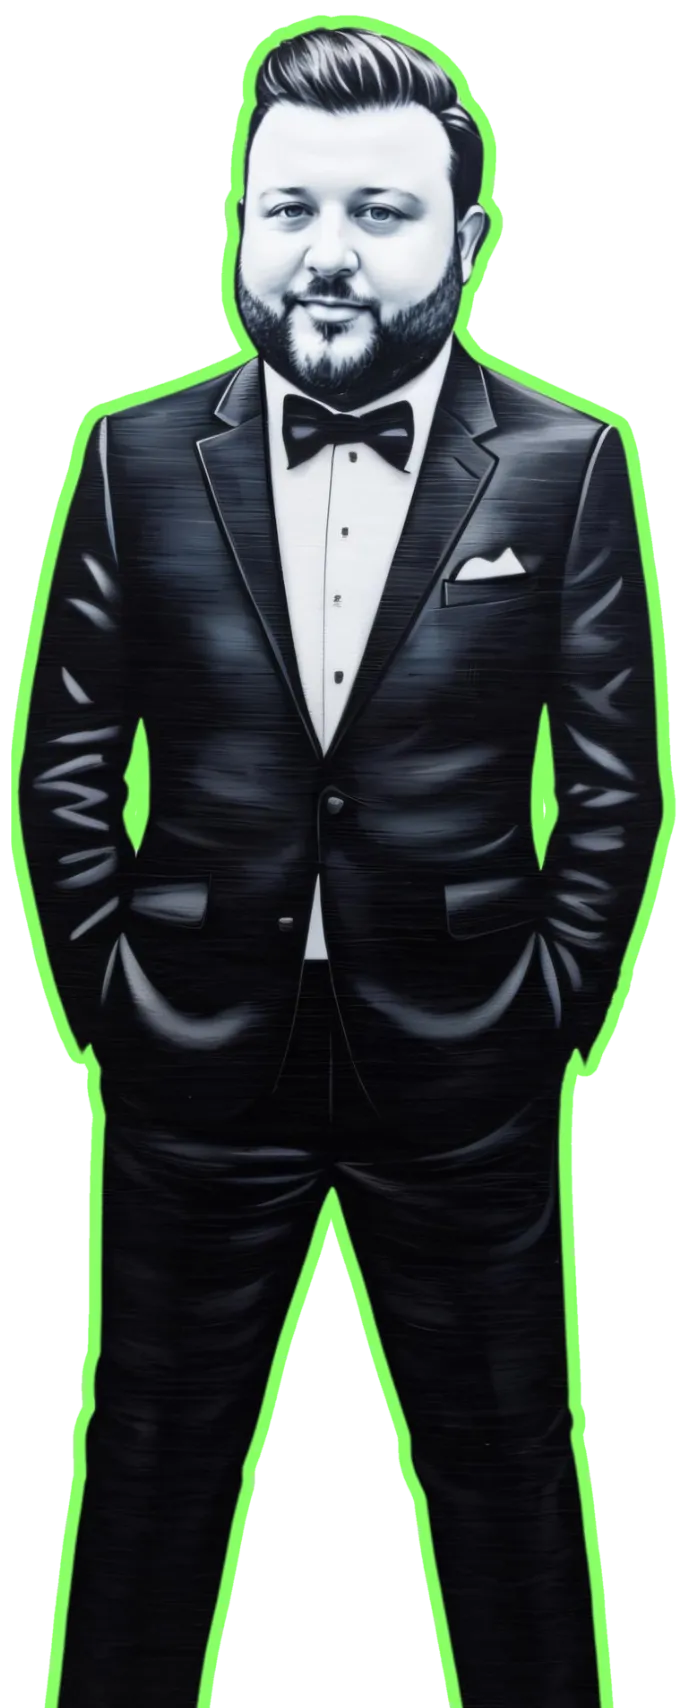 Adam Johnstone in a gray suit